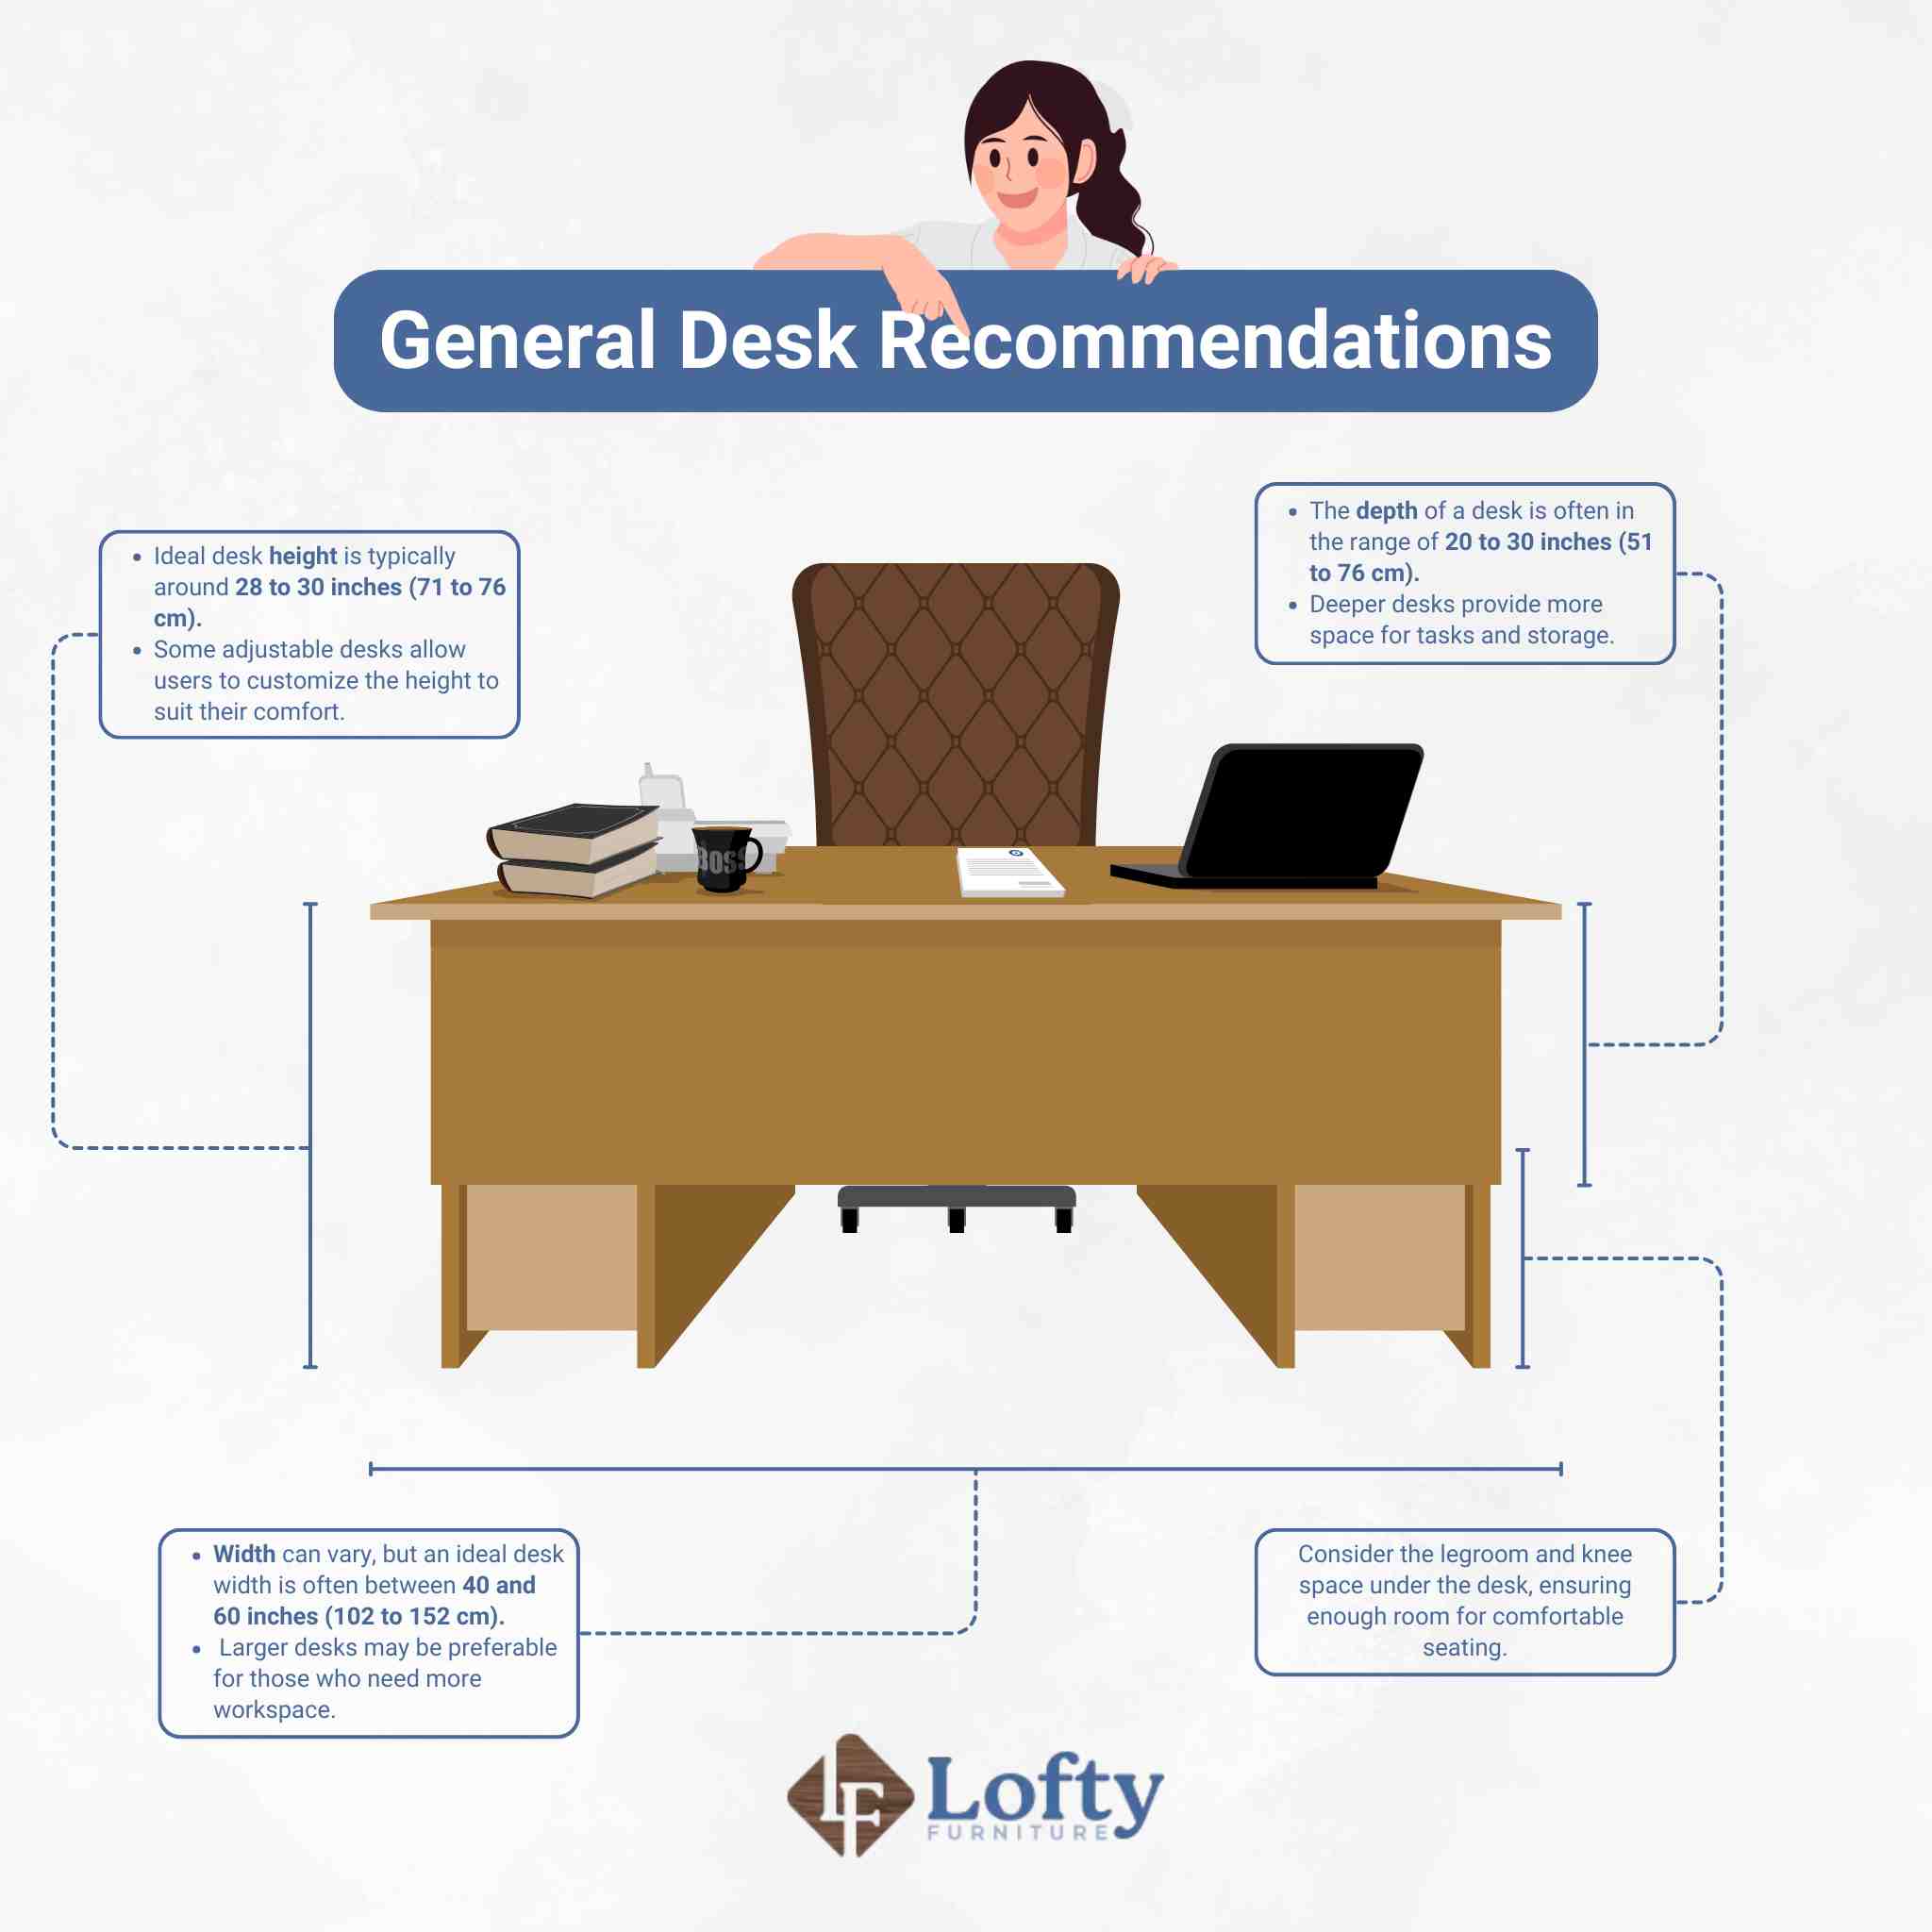 A general desk recommendation when choosing between ideal vs standard desk sizes.